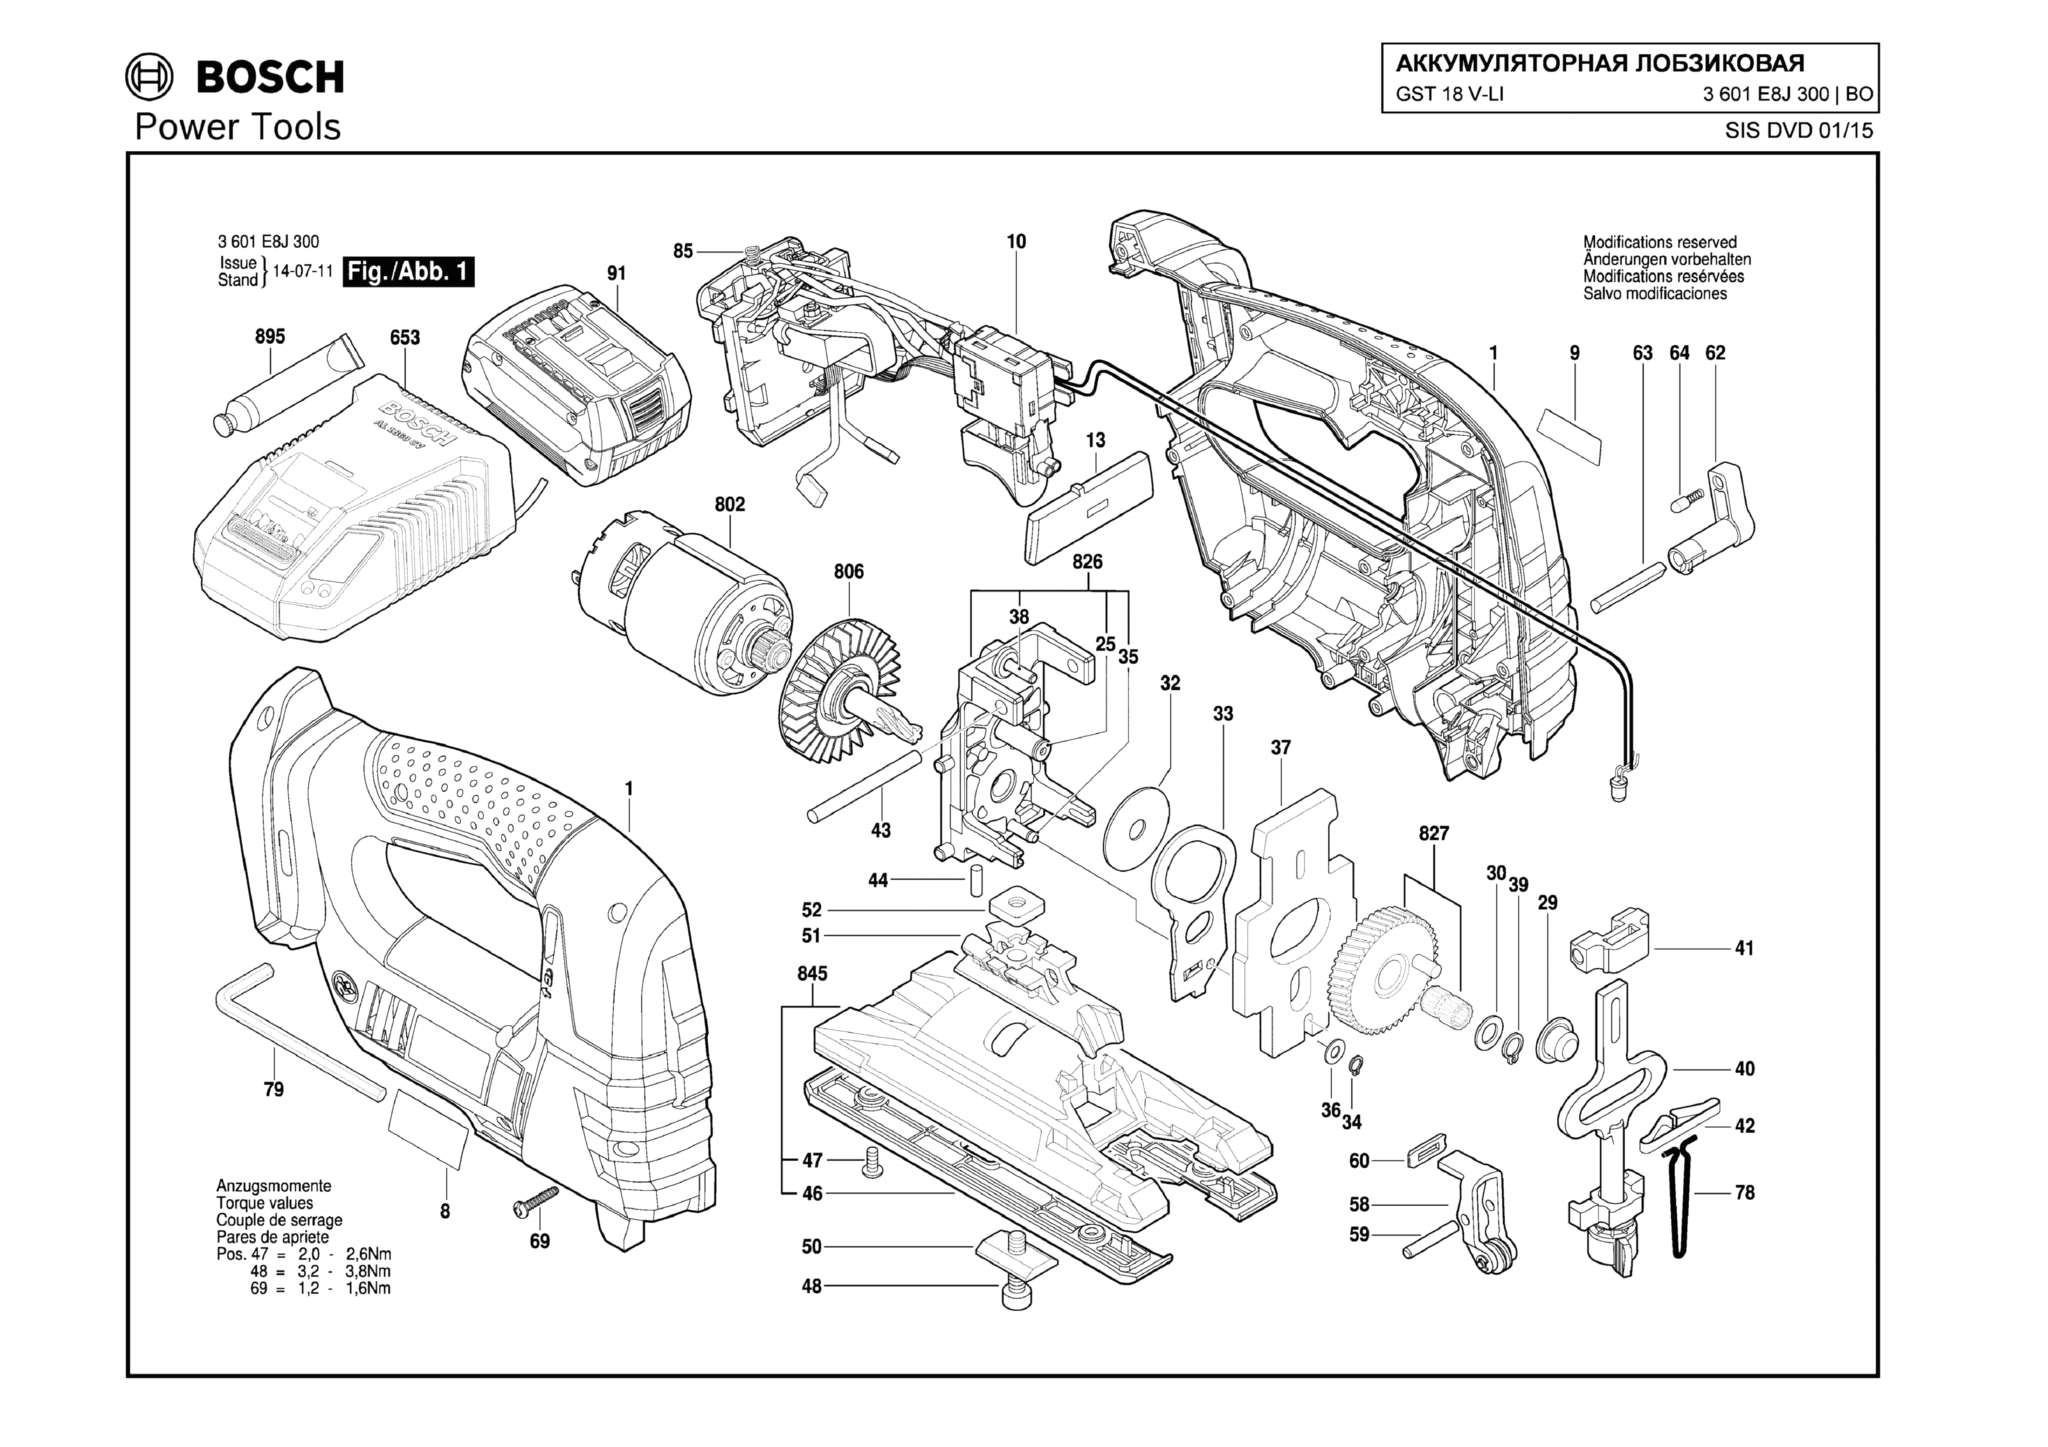 Запчасти, схема и деталировка Bosch GST 18 V-LI (ТИП 3601E8J300)